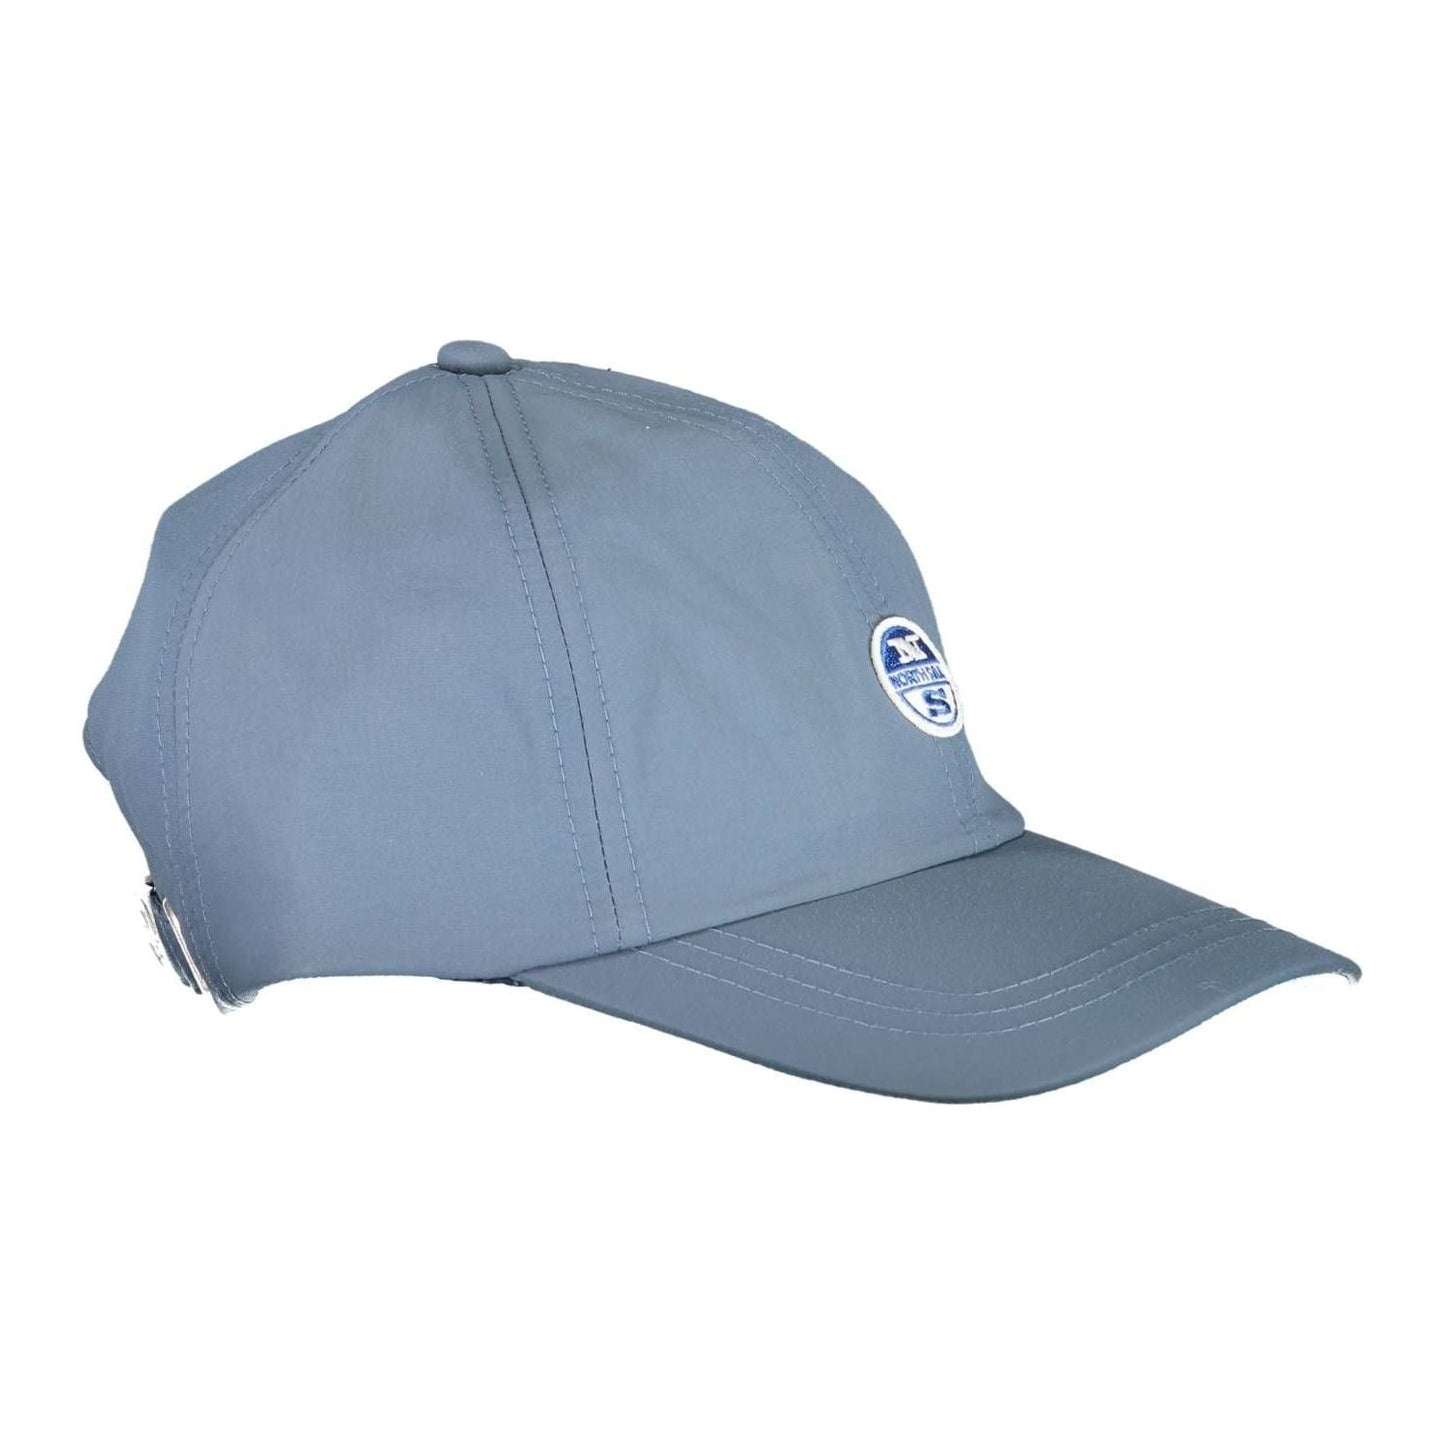 North Sails Chic Blue Visor Cap with Logo Accent chic-blue-visor-cap-with-logo-accent